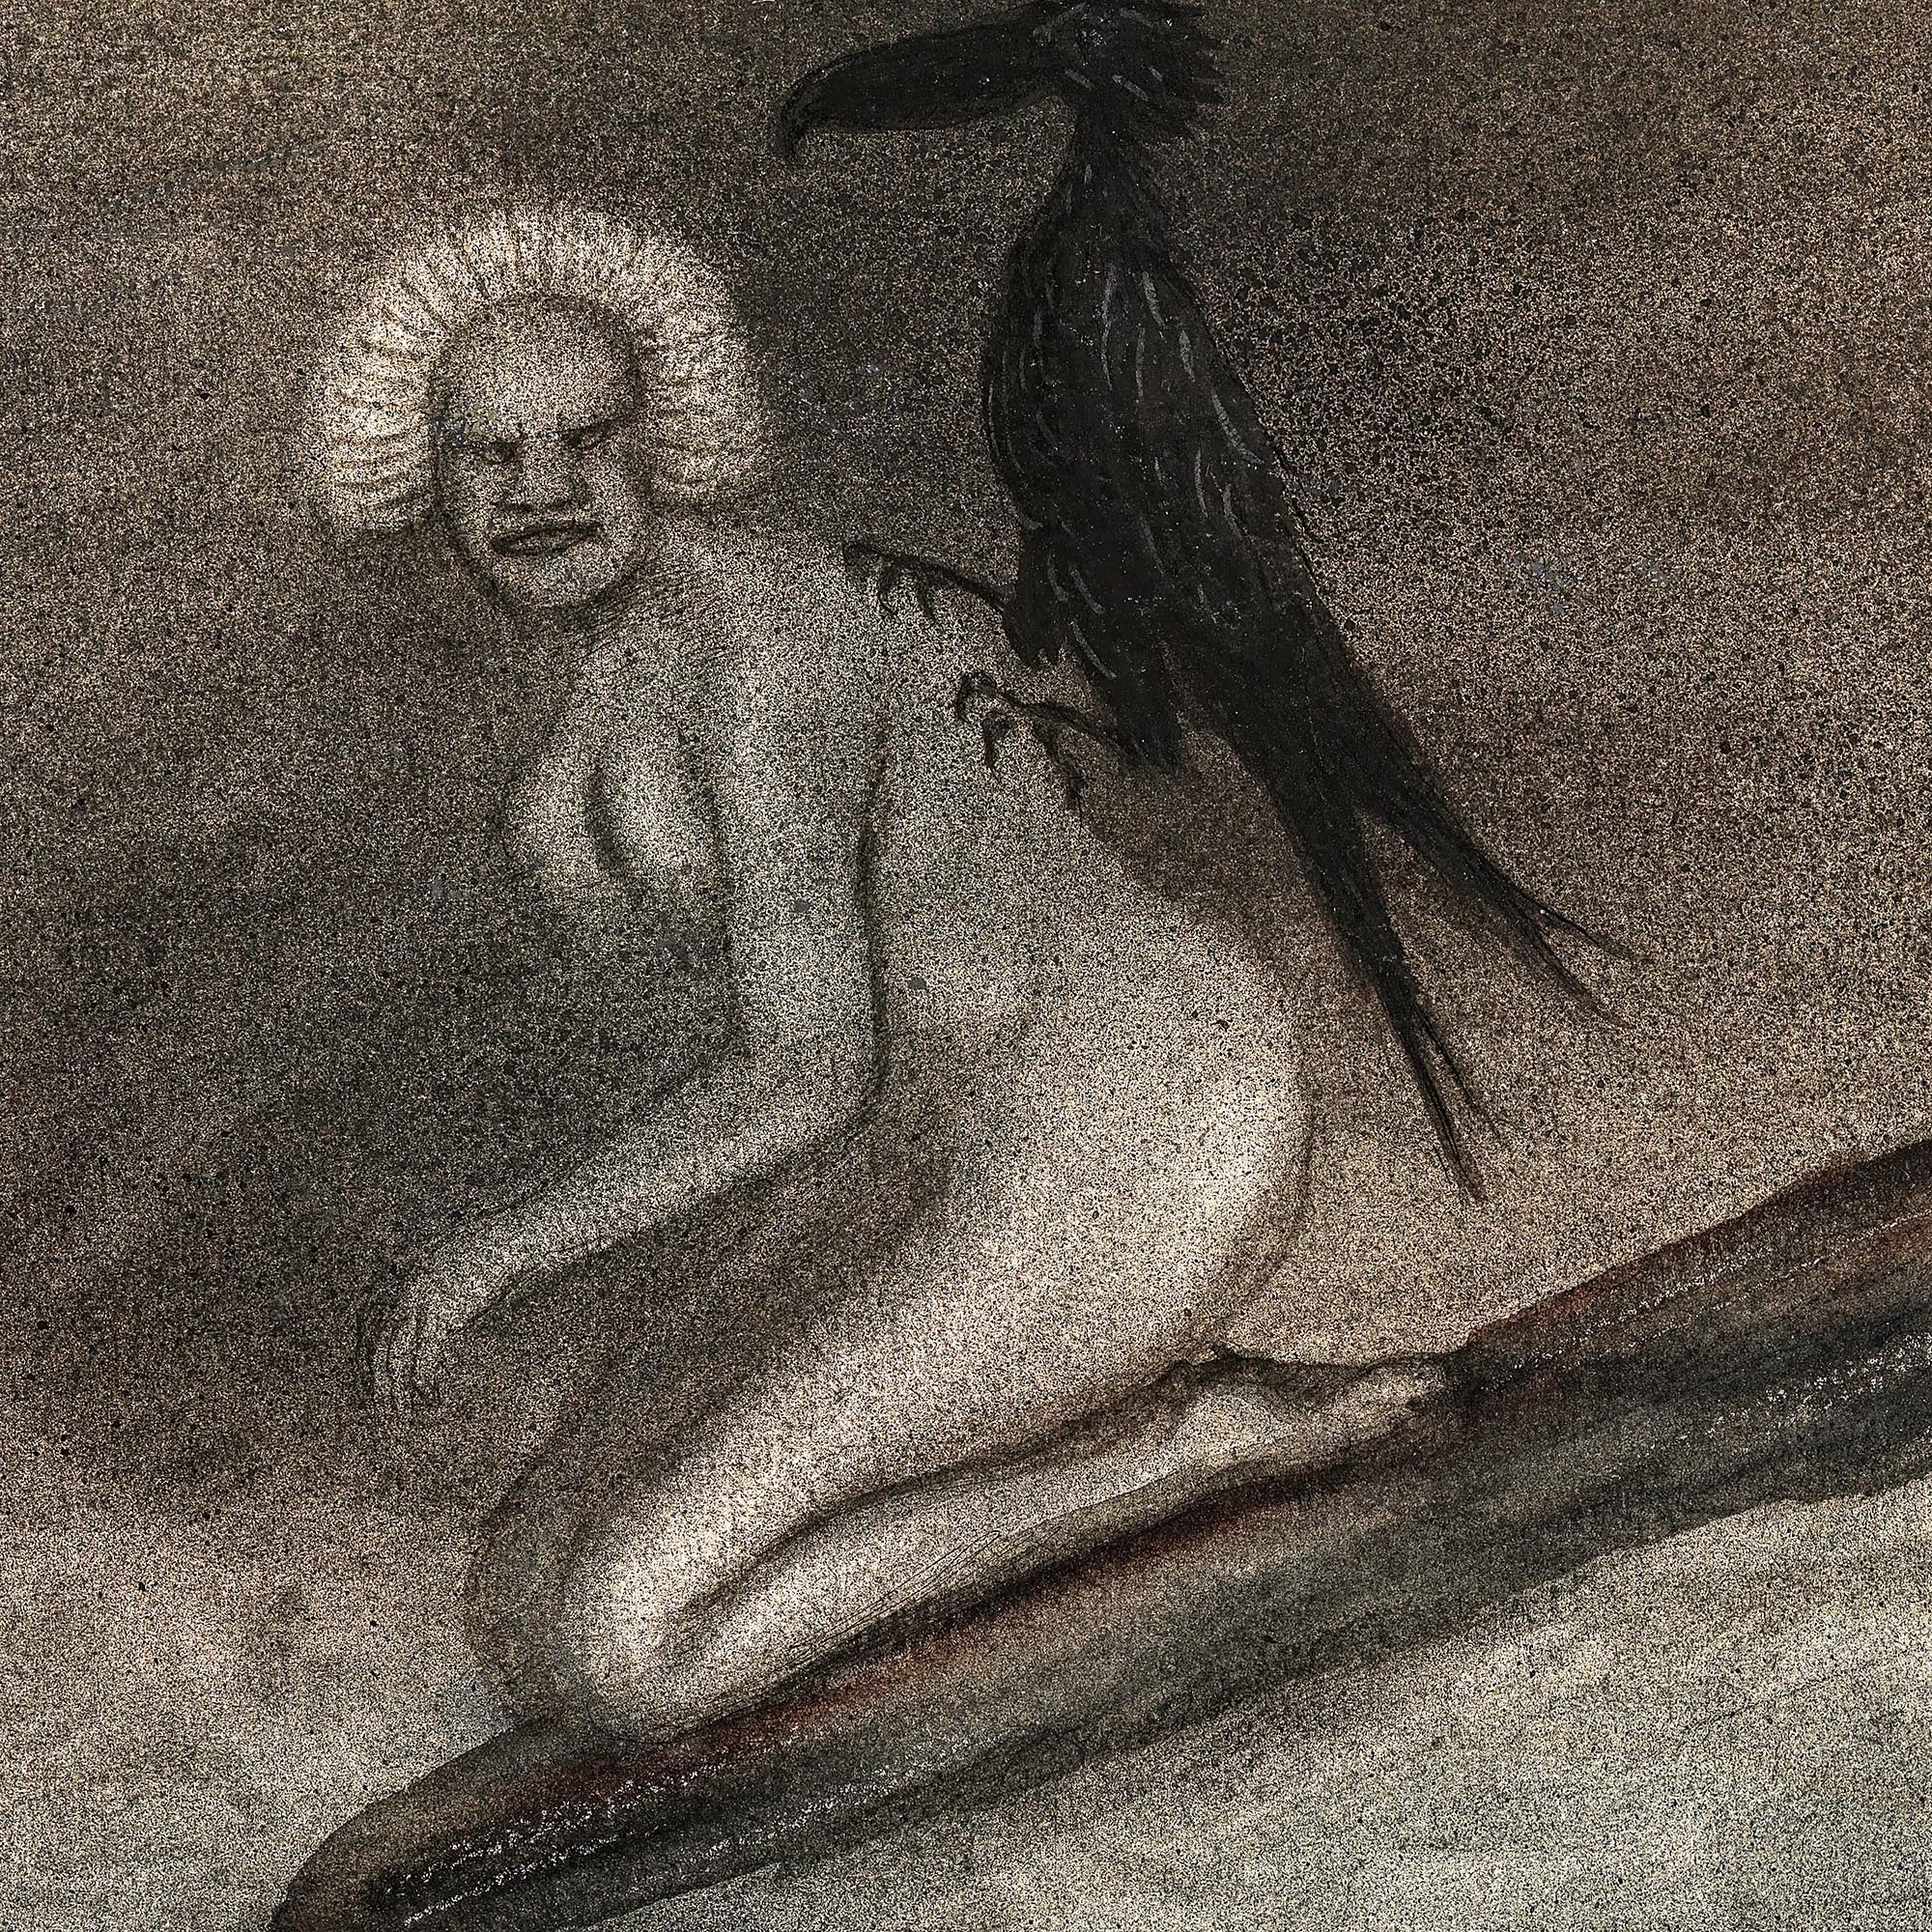 Fine art 8"x6" / Black Frame Kubin Witch and Crow, Raven | Satanic Demonic Luciferian Occult Witchy Art | Gothic Pagan Black Magic Framed Art Print